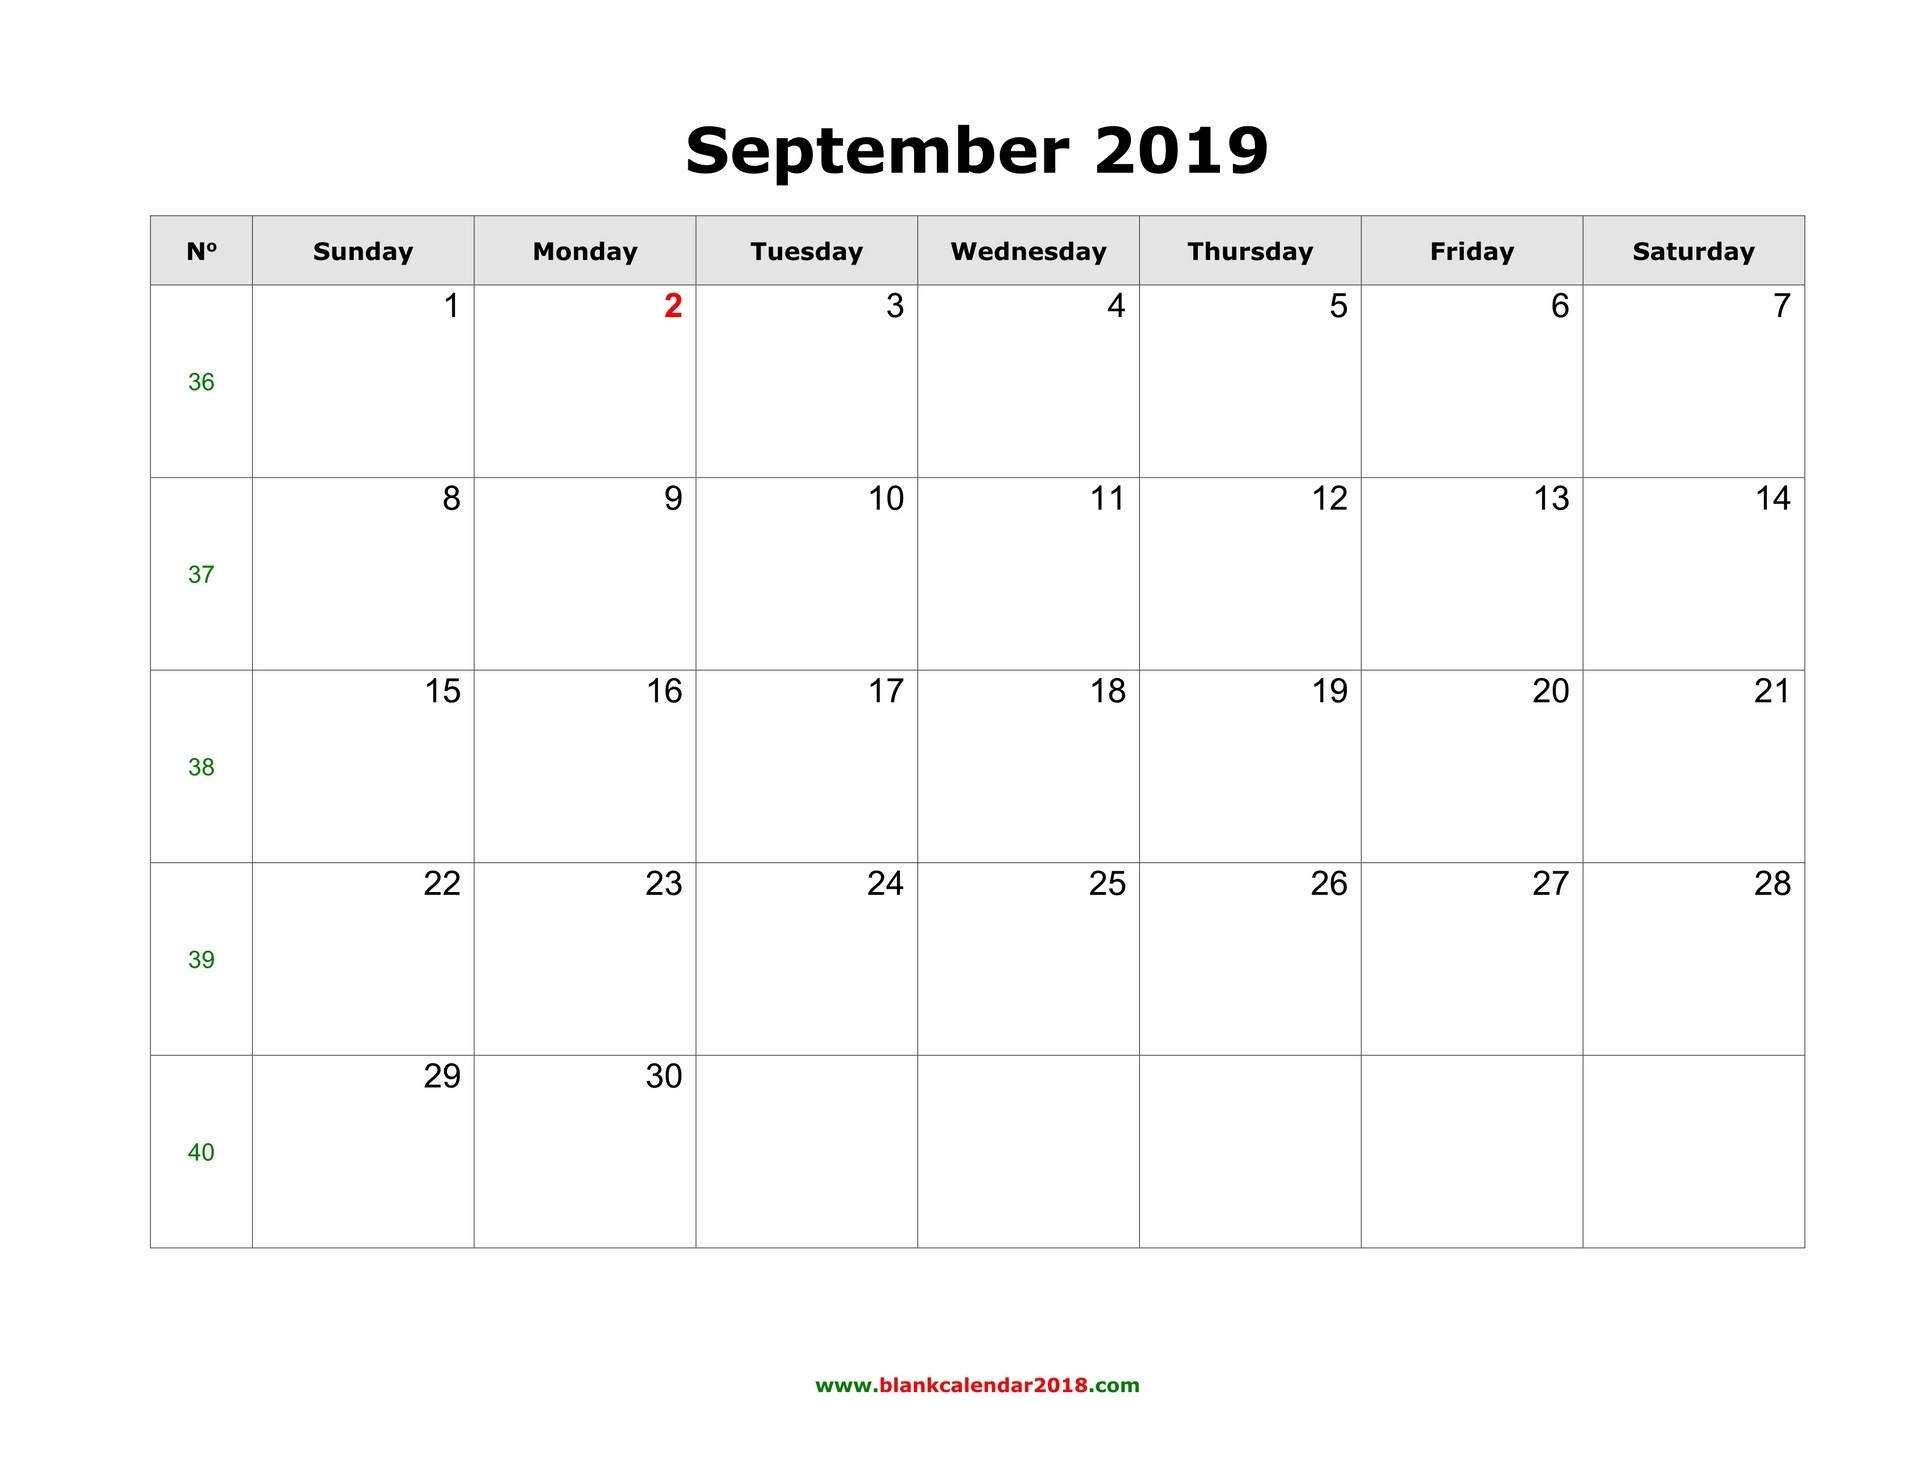 Print Blank Calander Microsoft 365 Calendar Template Printable